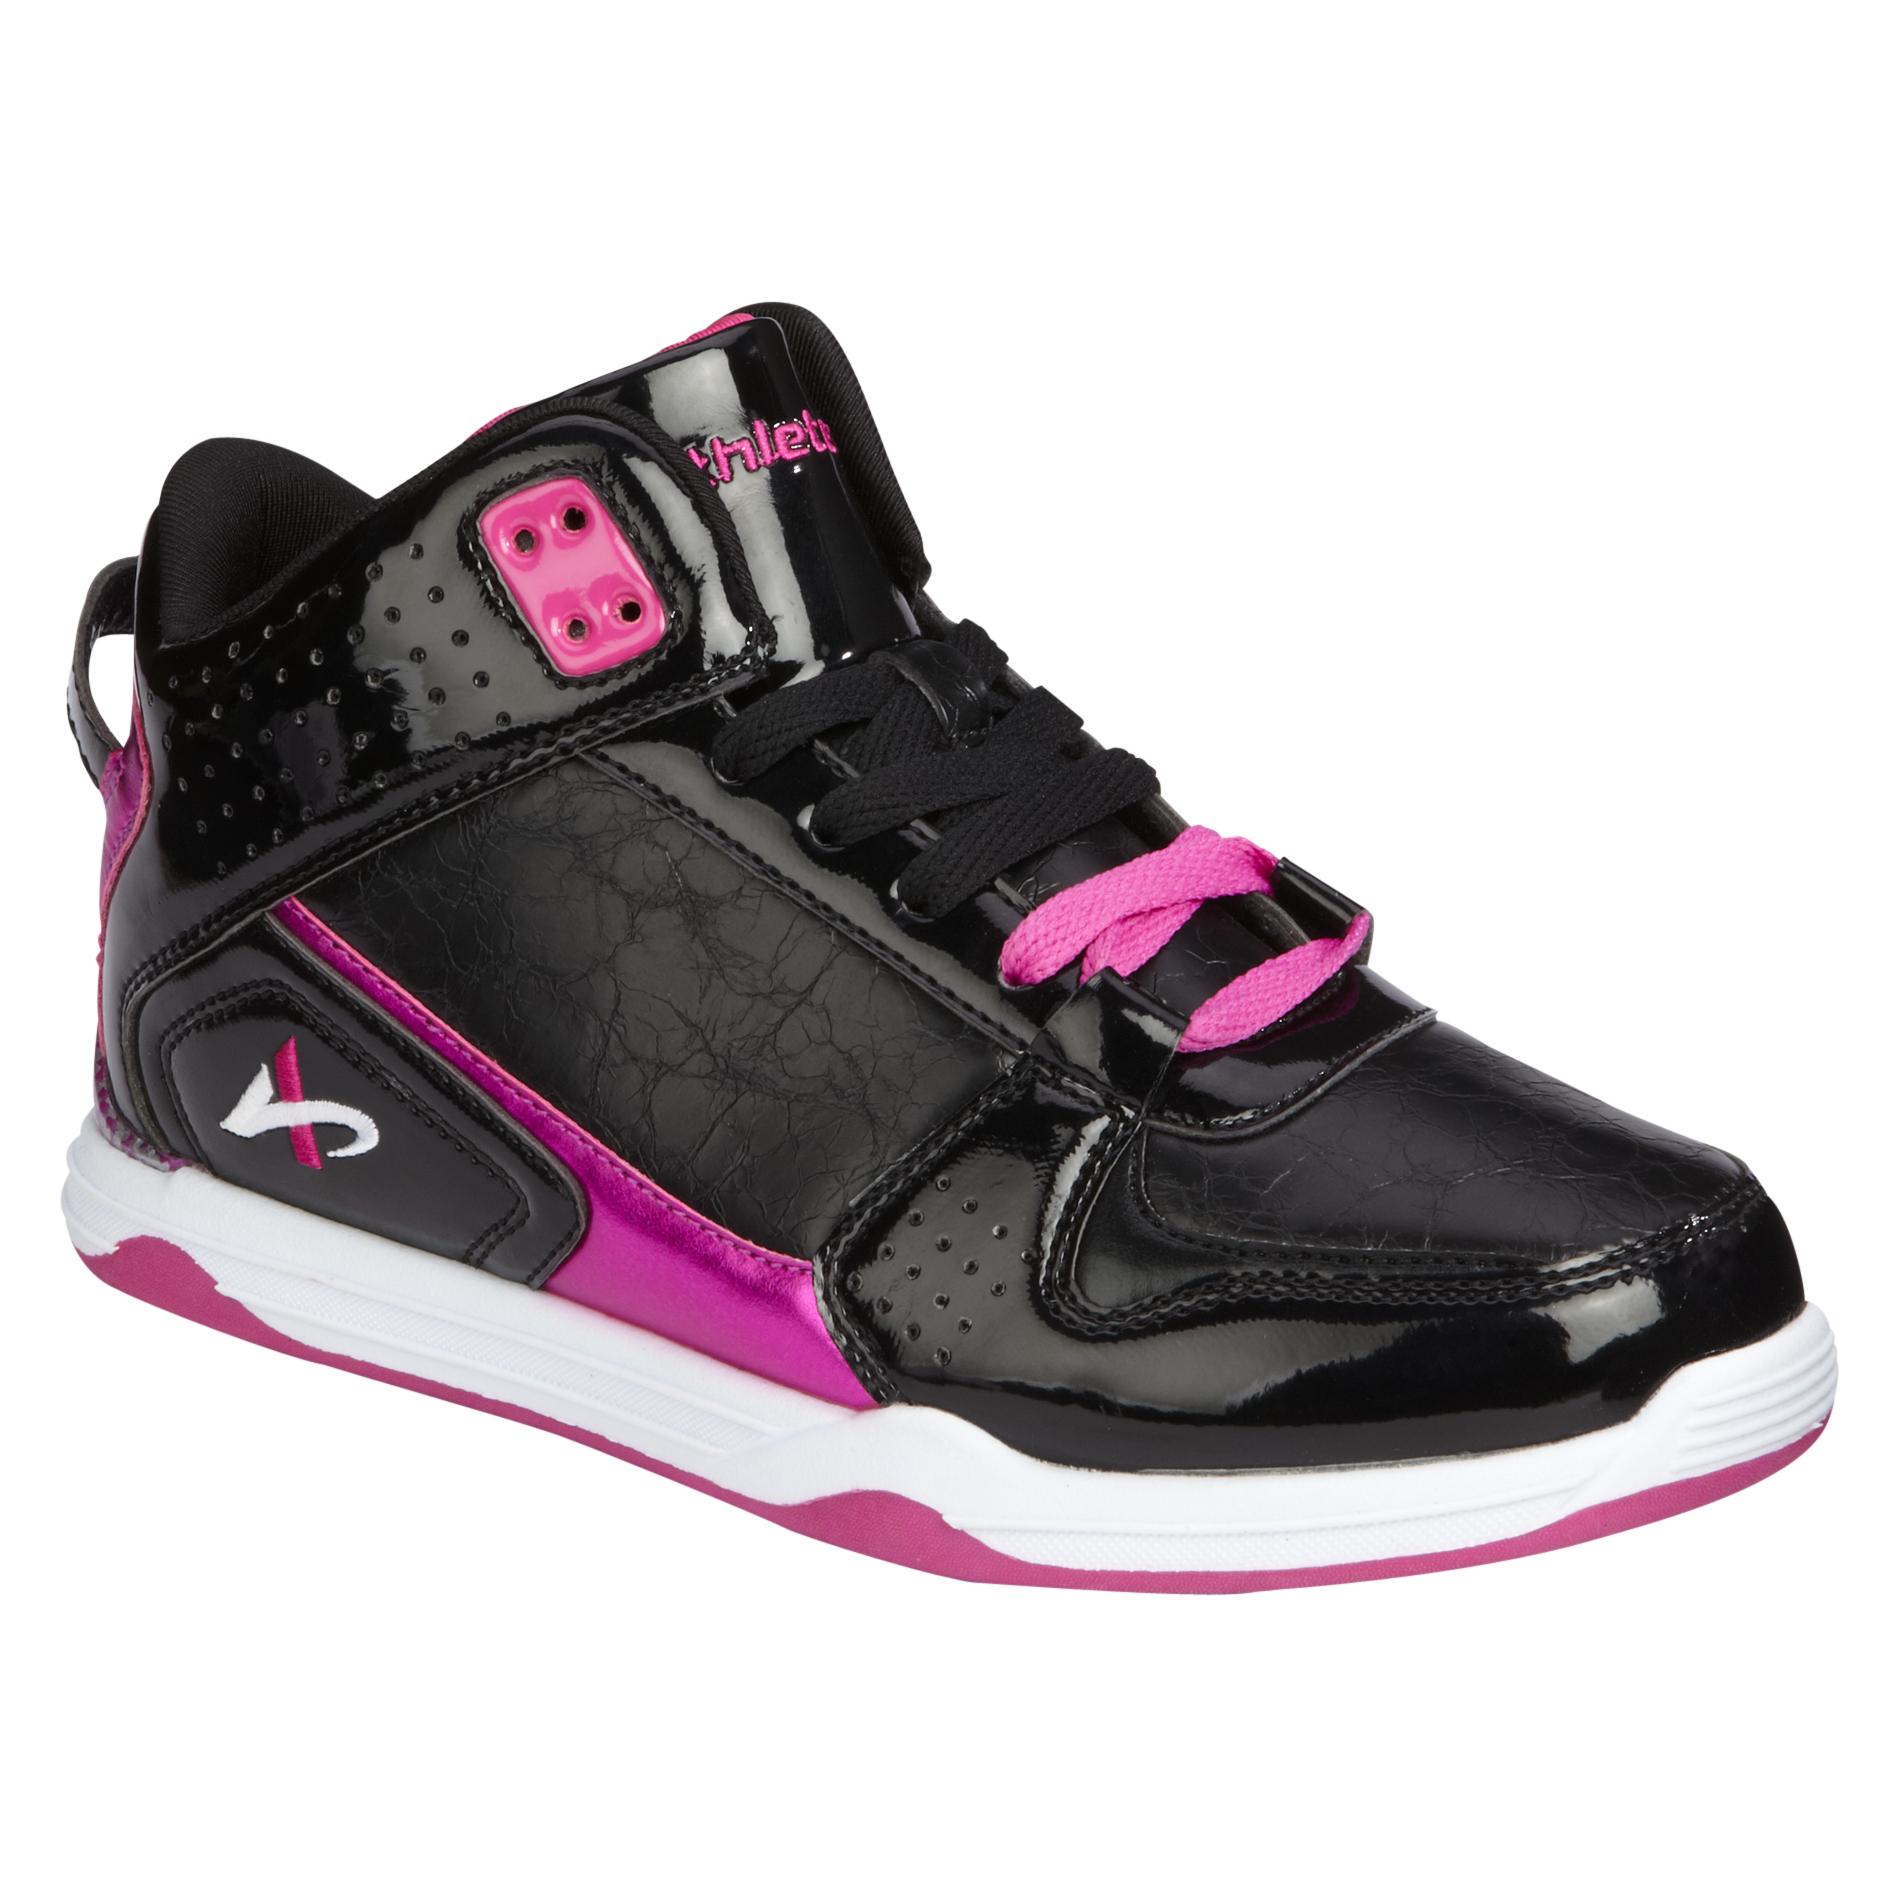 Athletech Women's Athletic Shoe Preen Hi-Top - Black/Pink